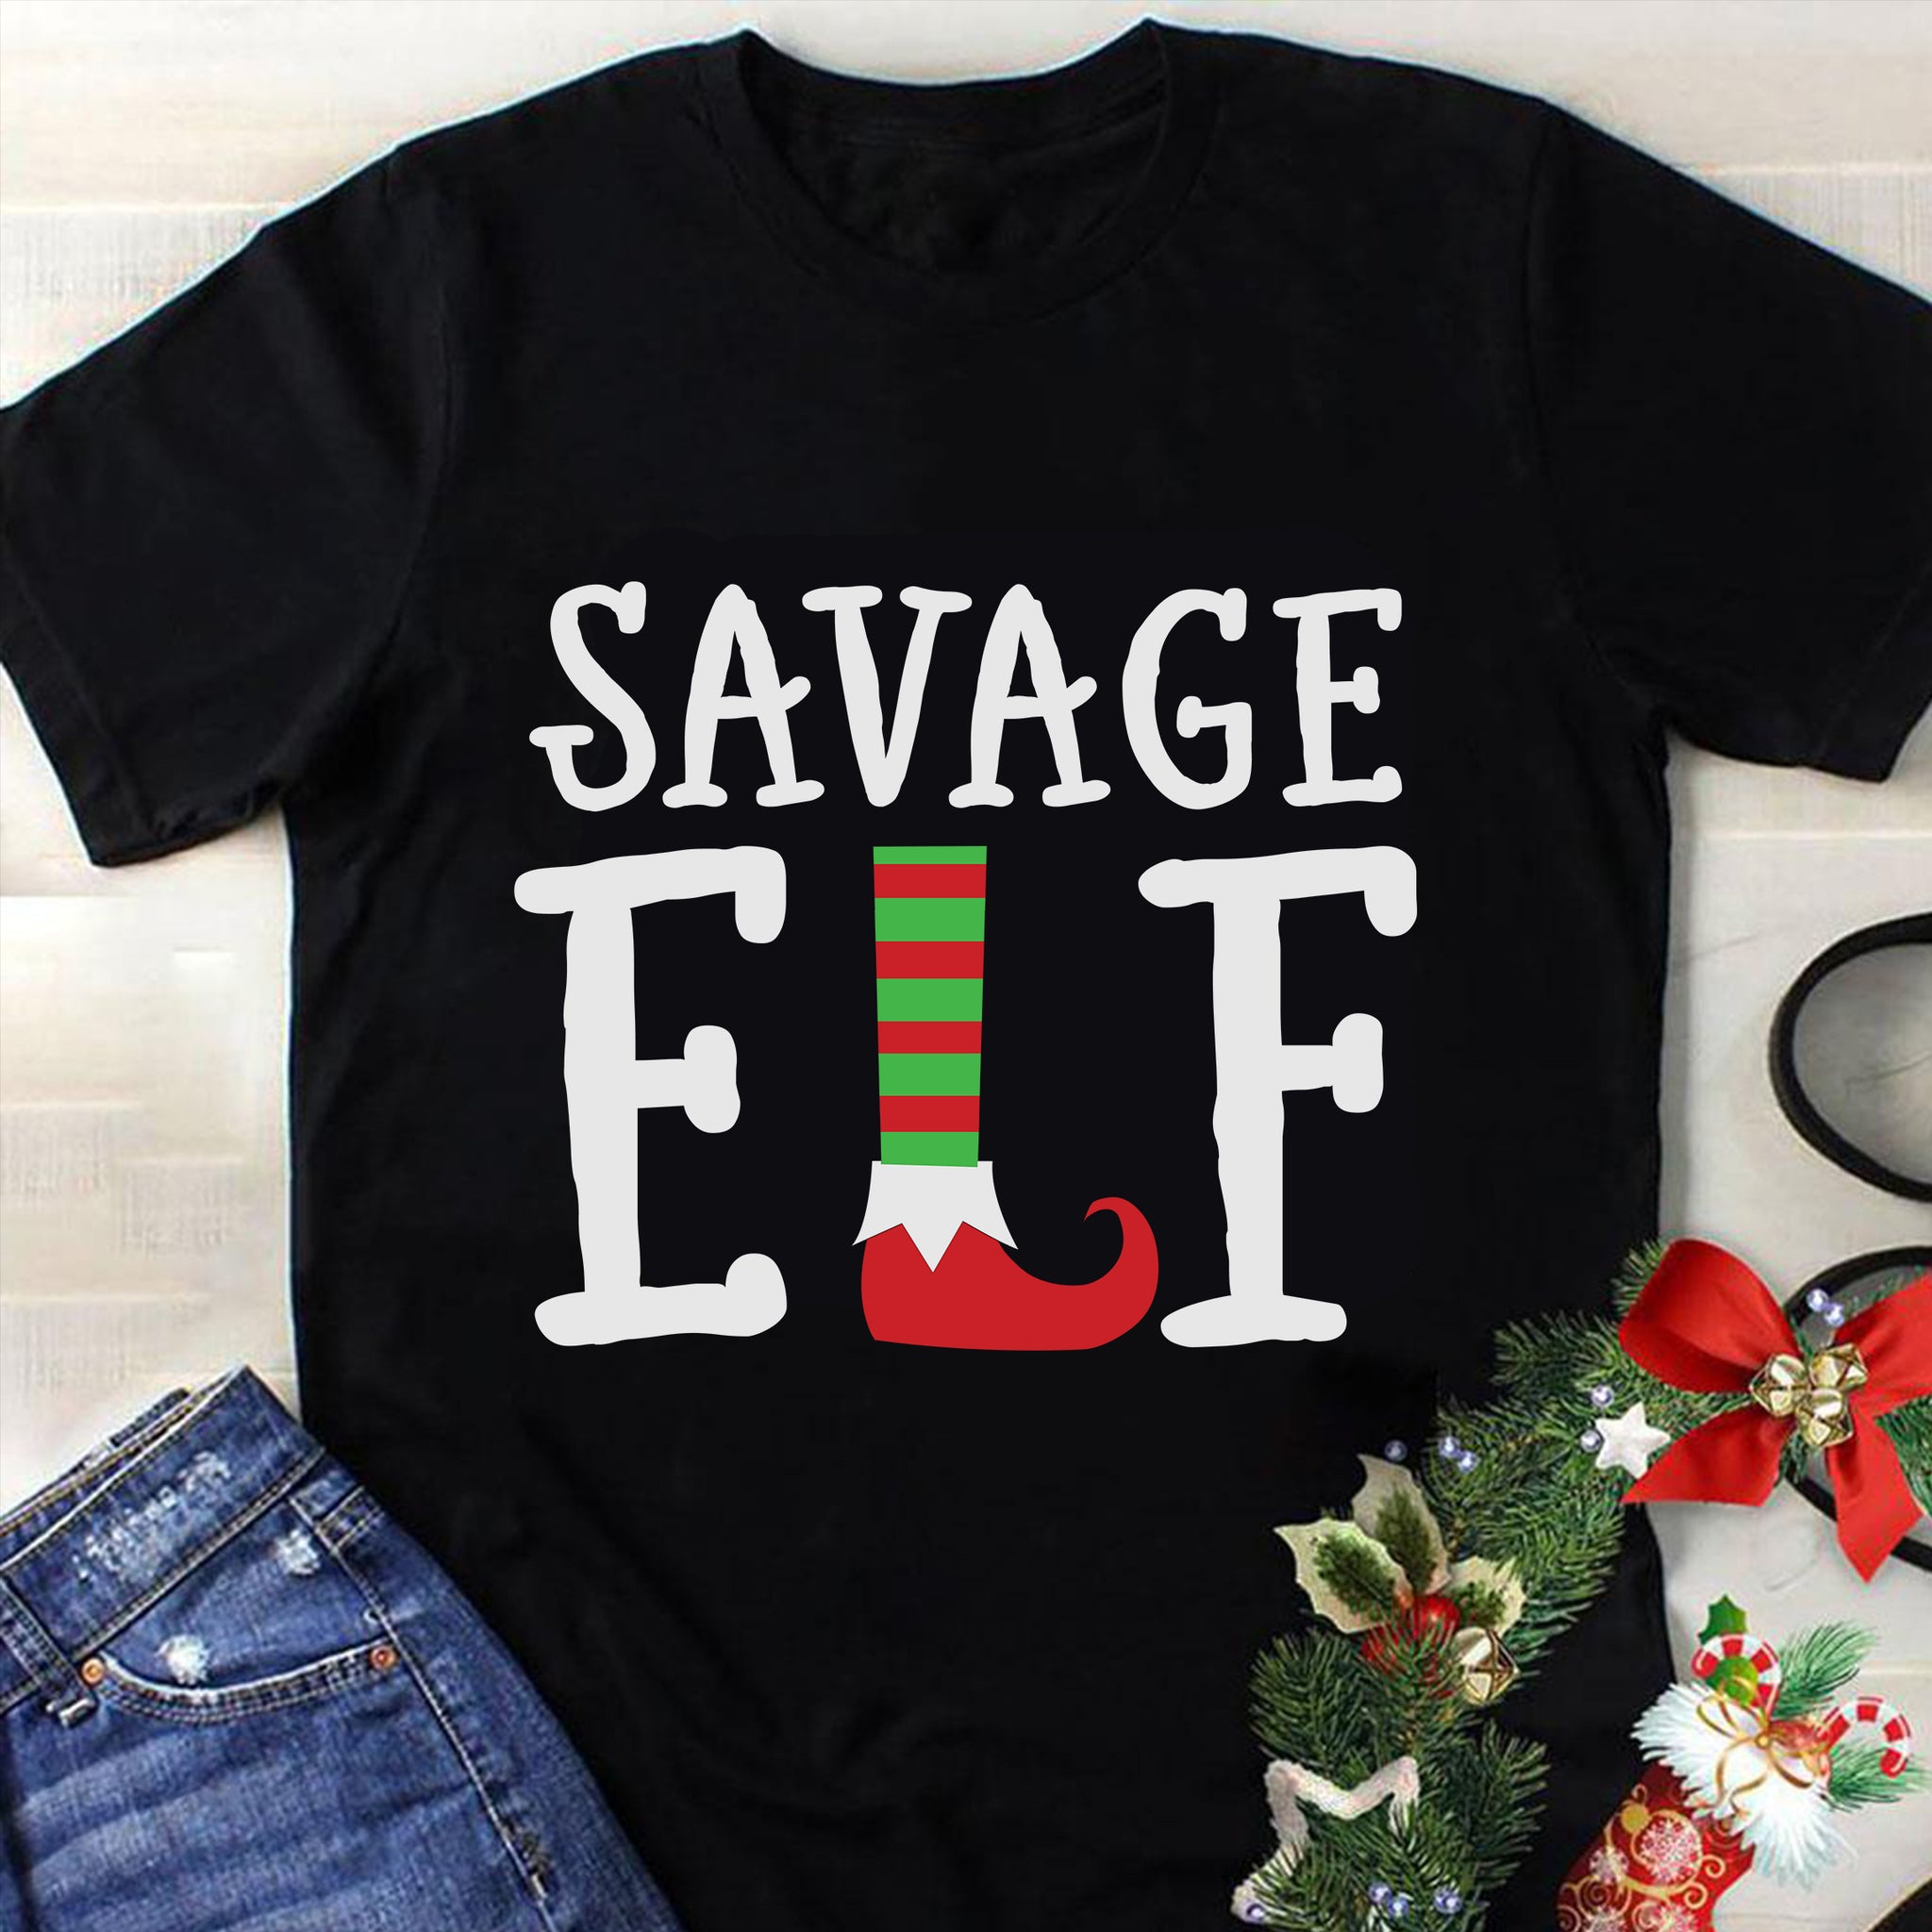 Savage ELF Svg, Christmas Svg, Tree Christmas Svg, Tree Svg, Santa Svg, Snow Svg, Merry Christmas Svg, Hat Santa Svg, Light Christmas Svg